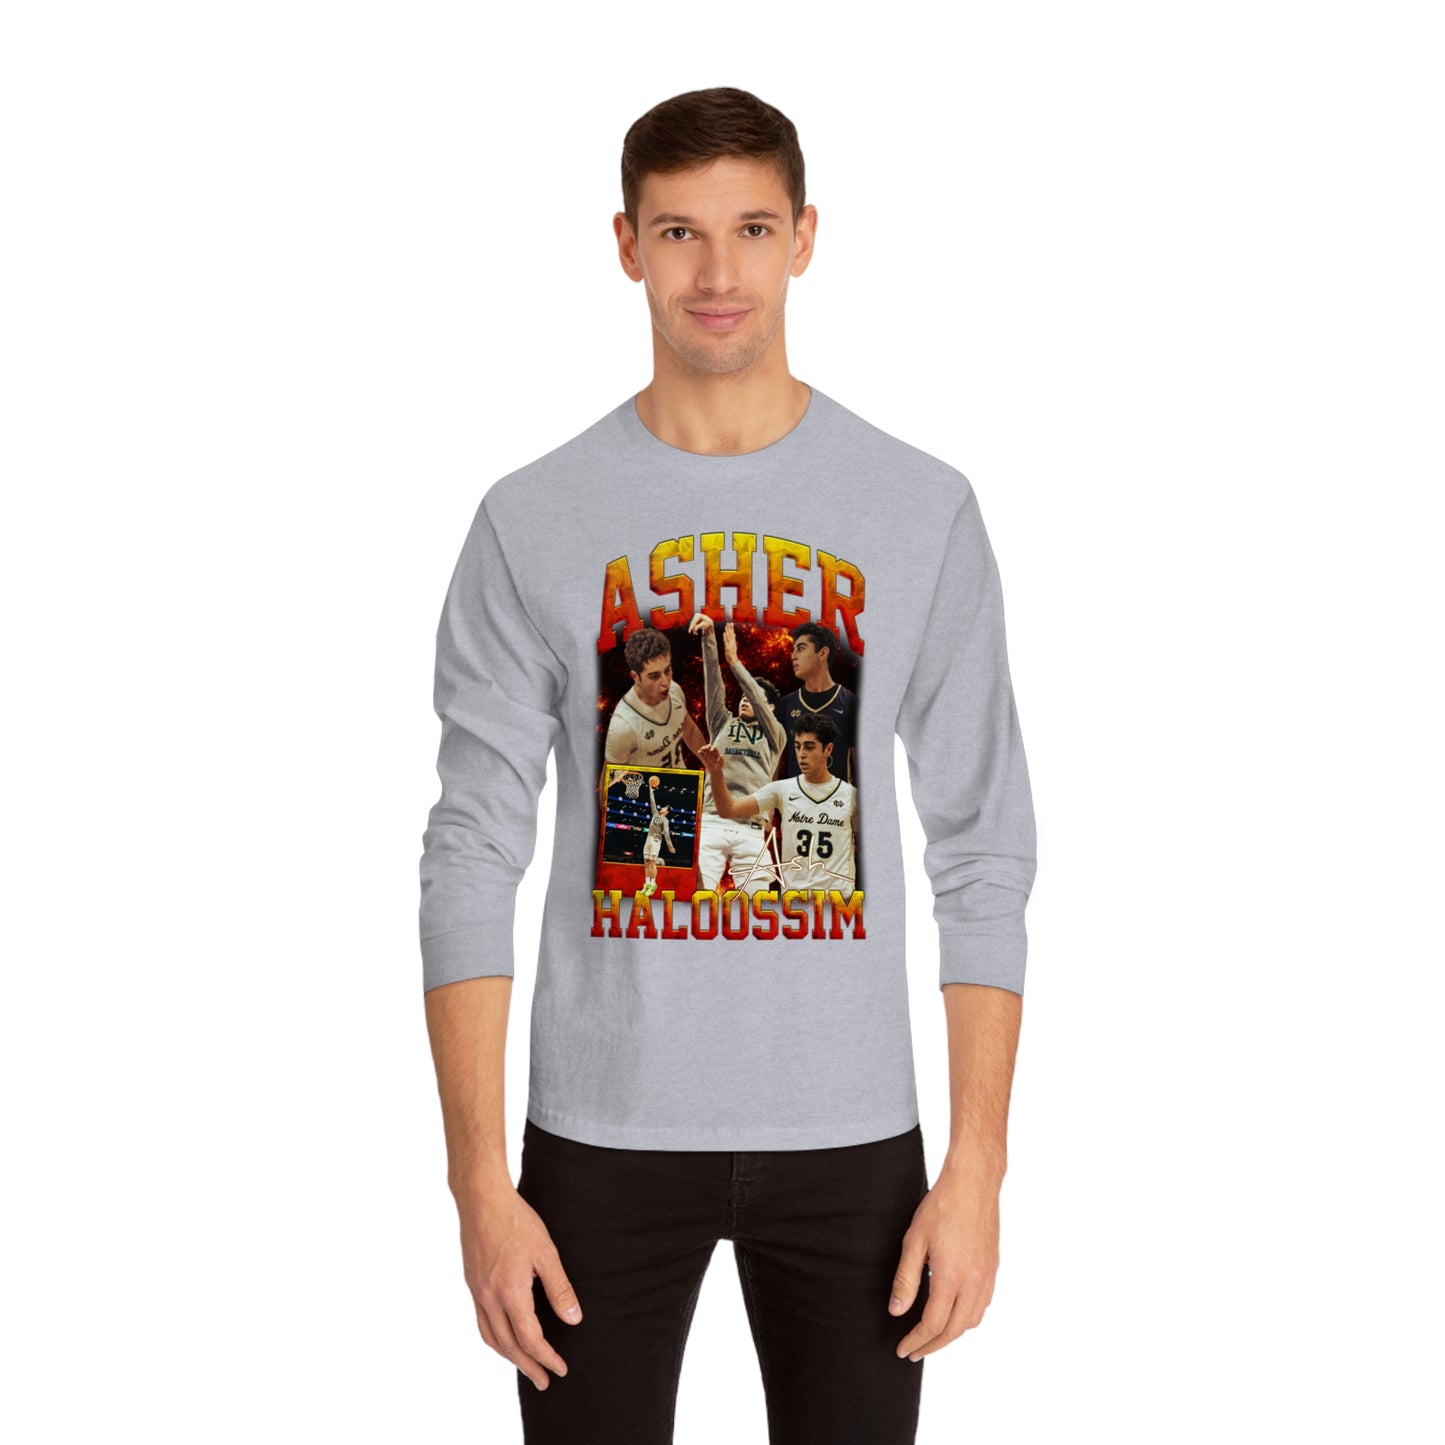 Asher Haloossim Classic Long Sleeve T-Shirt